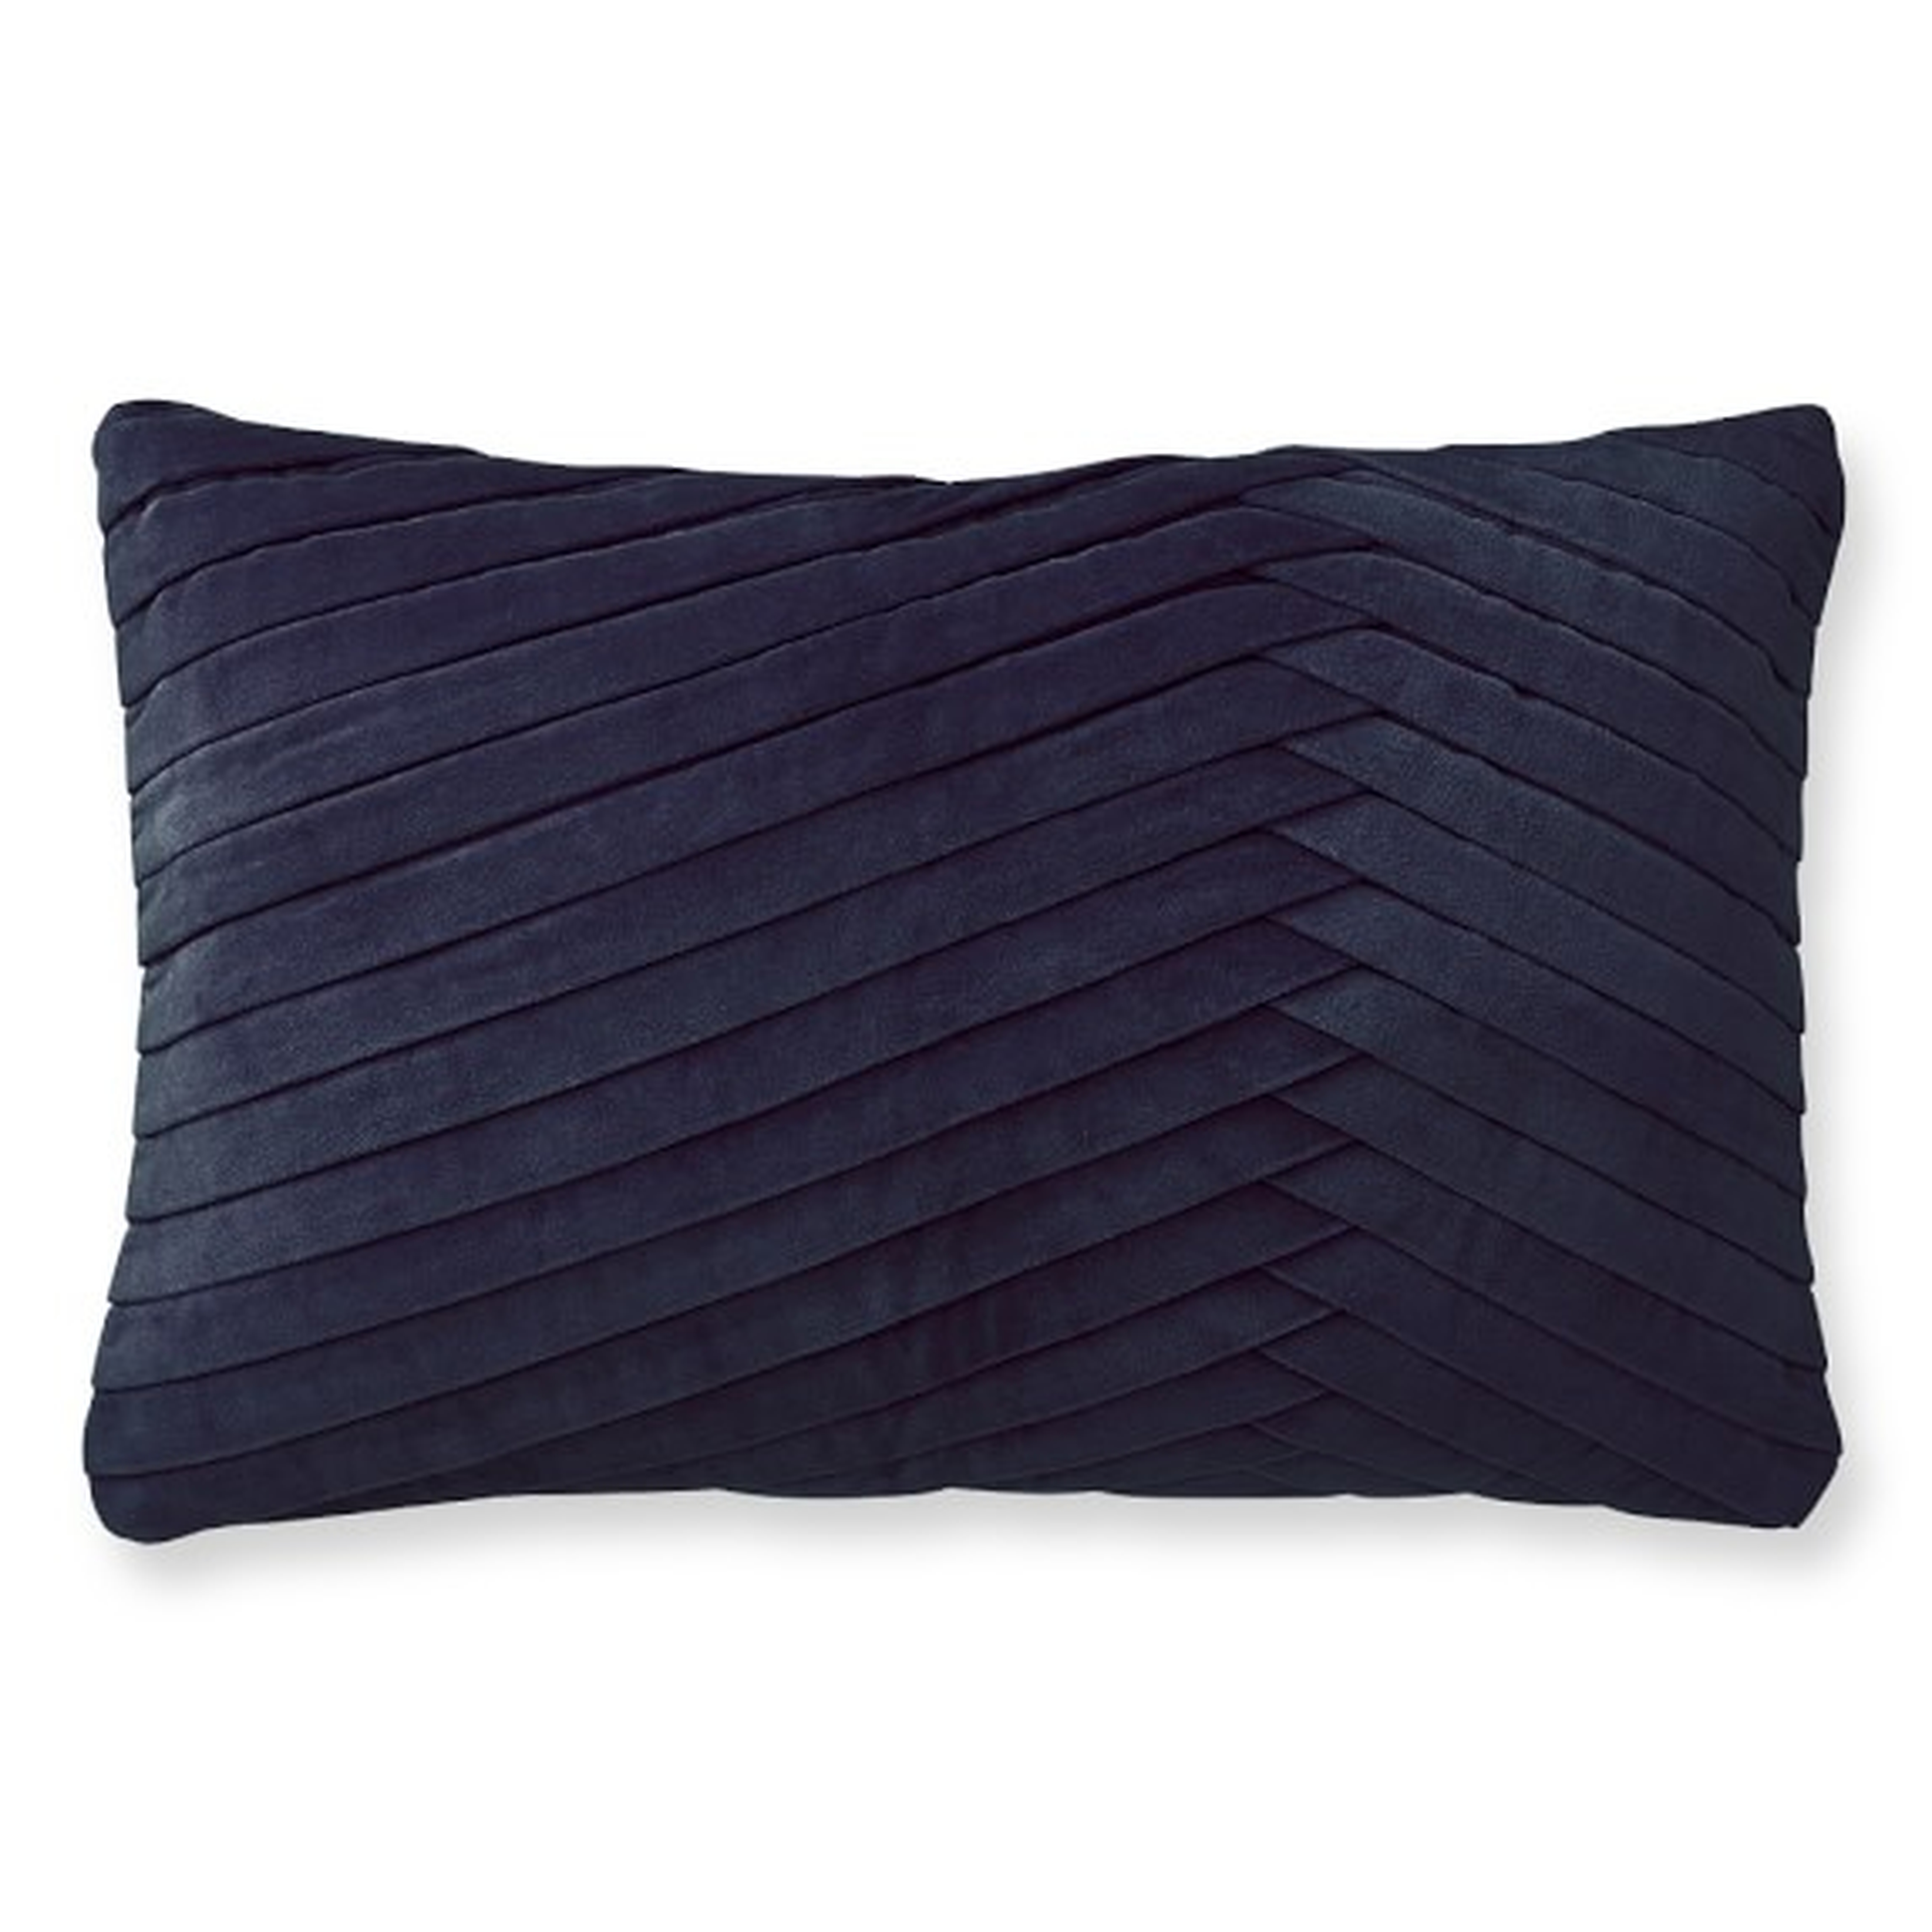 Pleated Velvet Lumbar Pillow Cover, Peacoat - Williams Sonoma Home